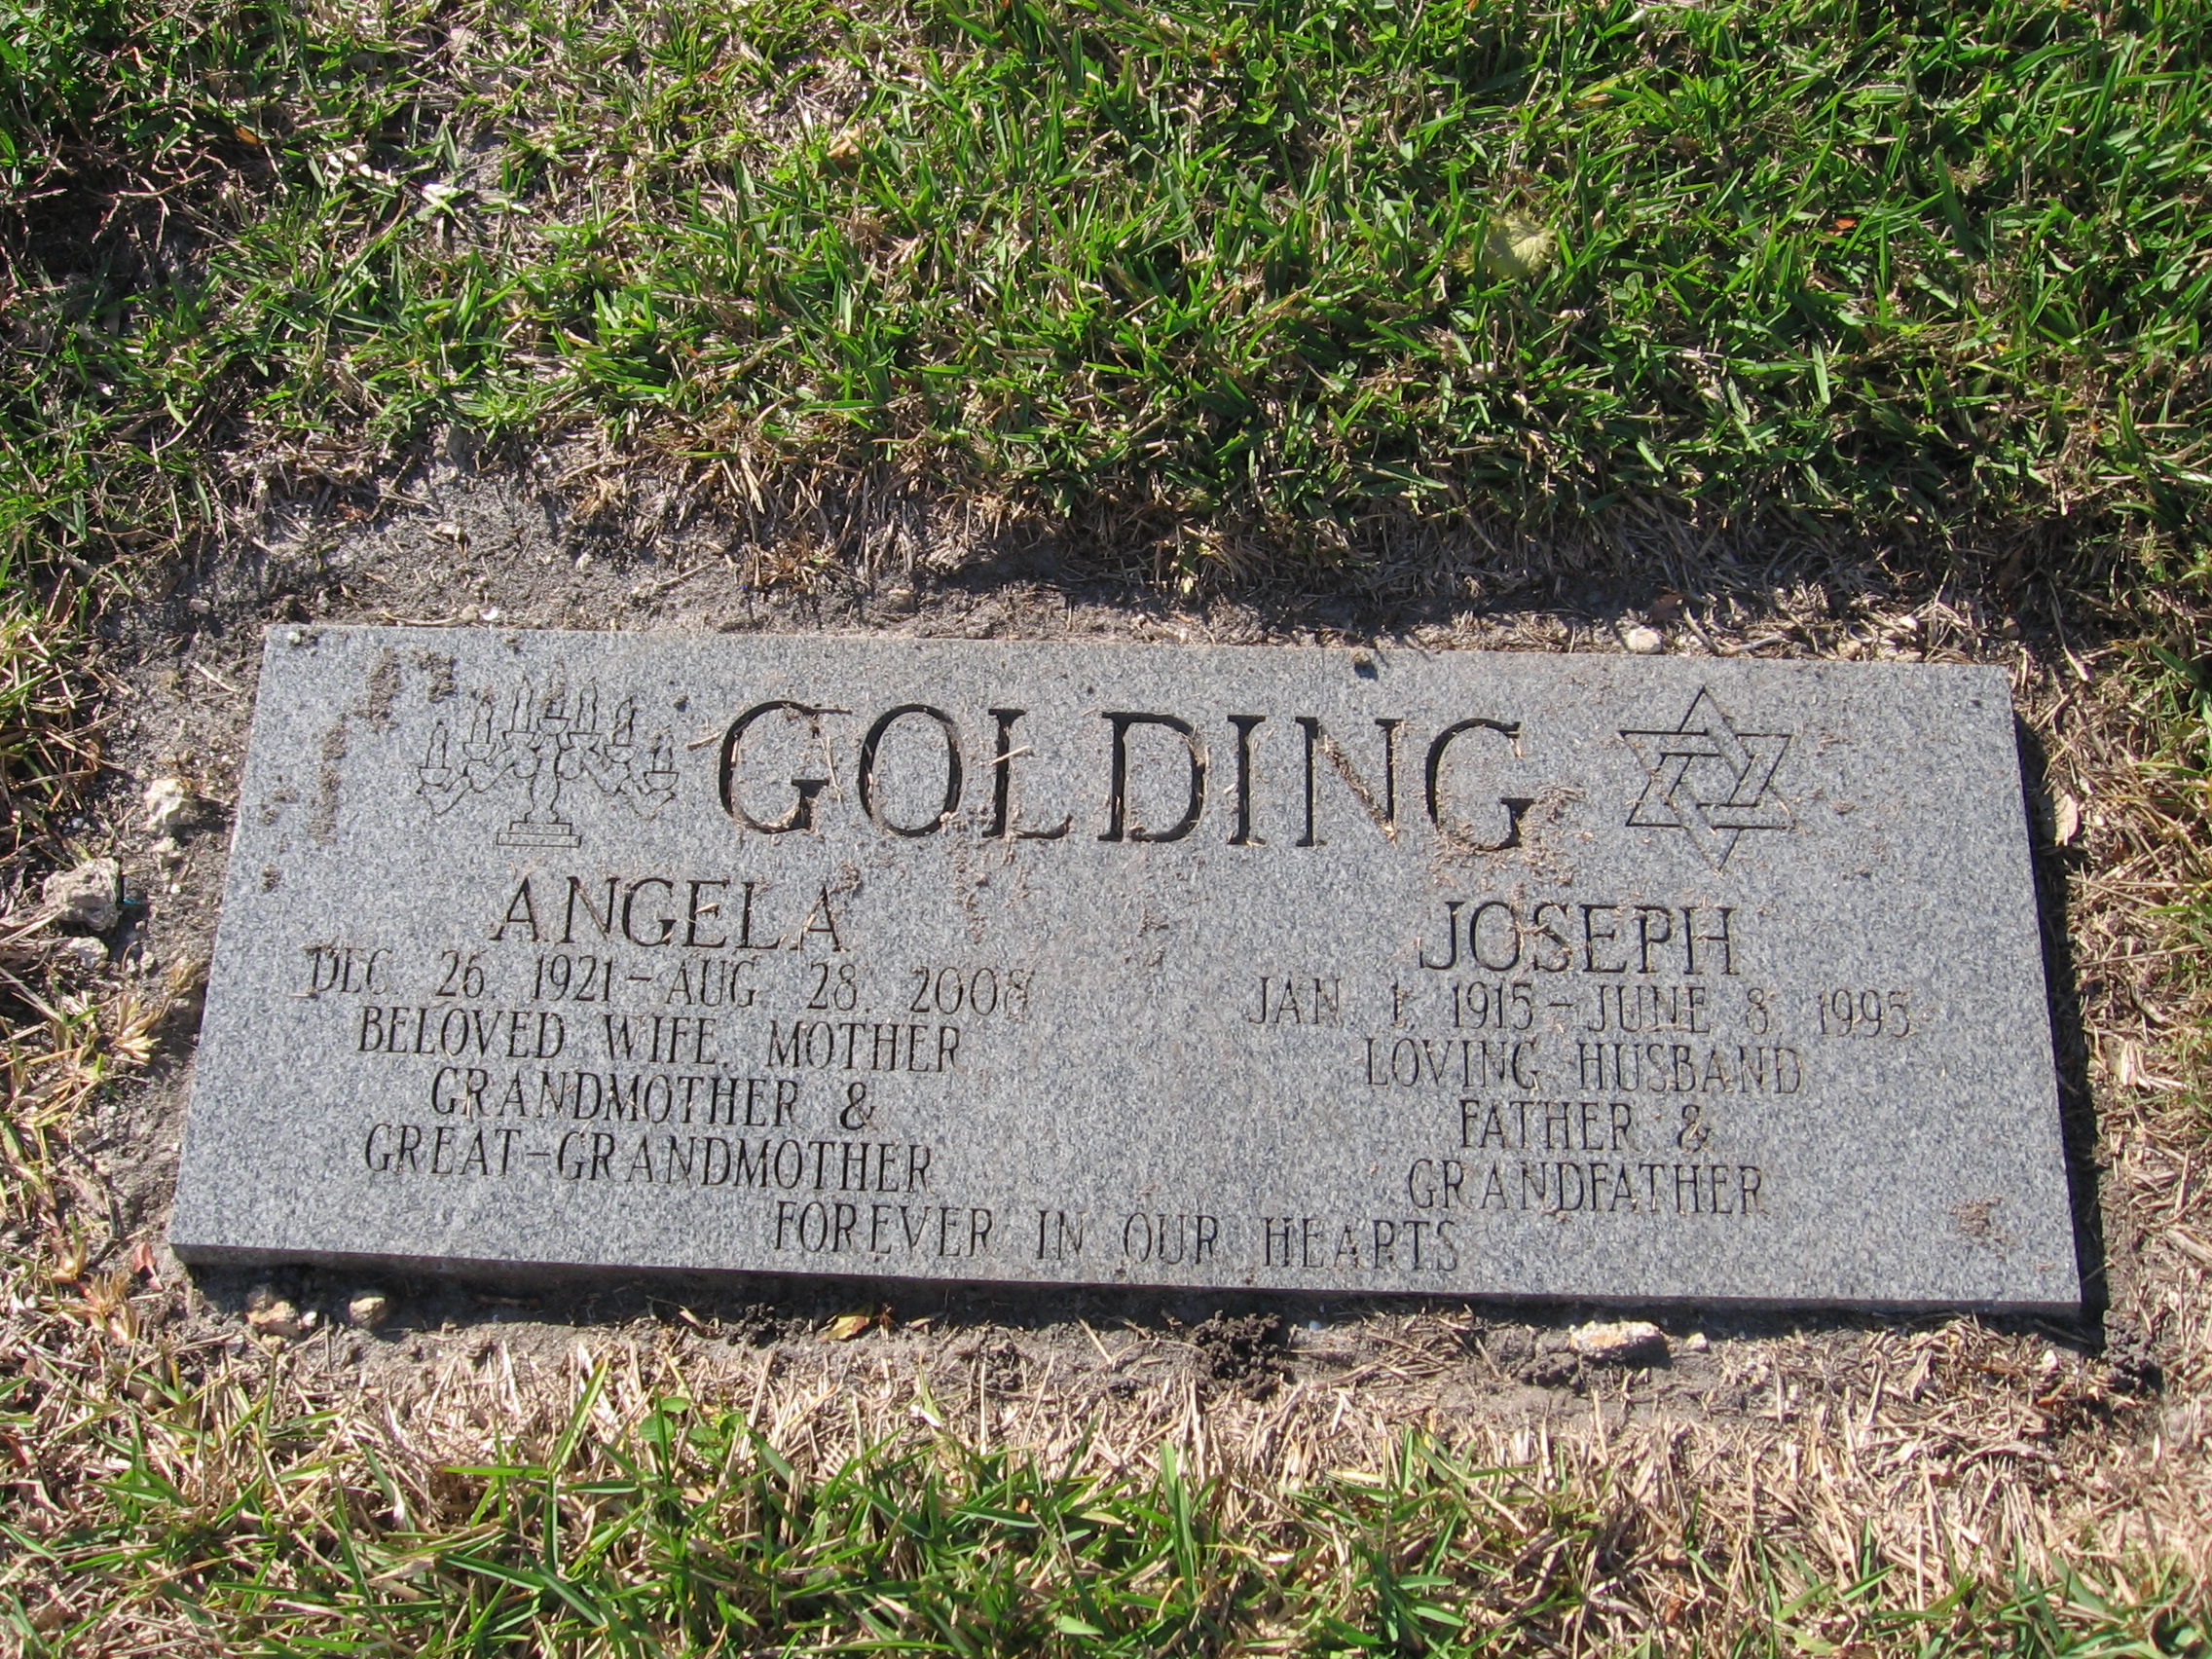 Joseph Golding